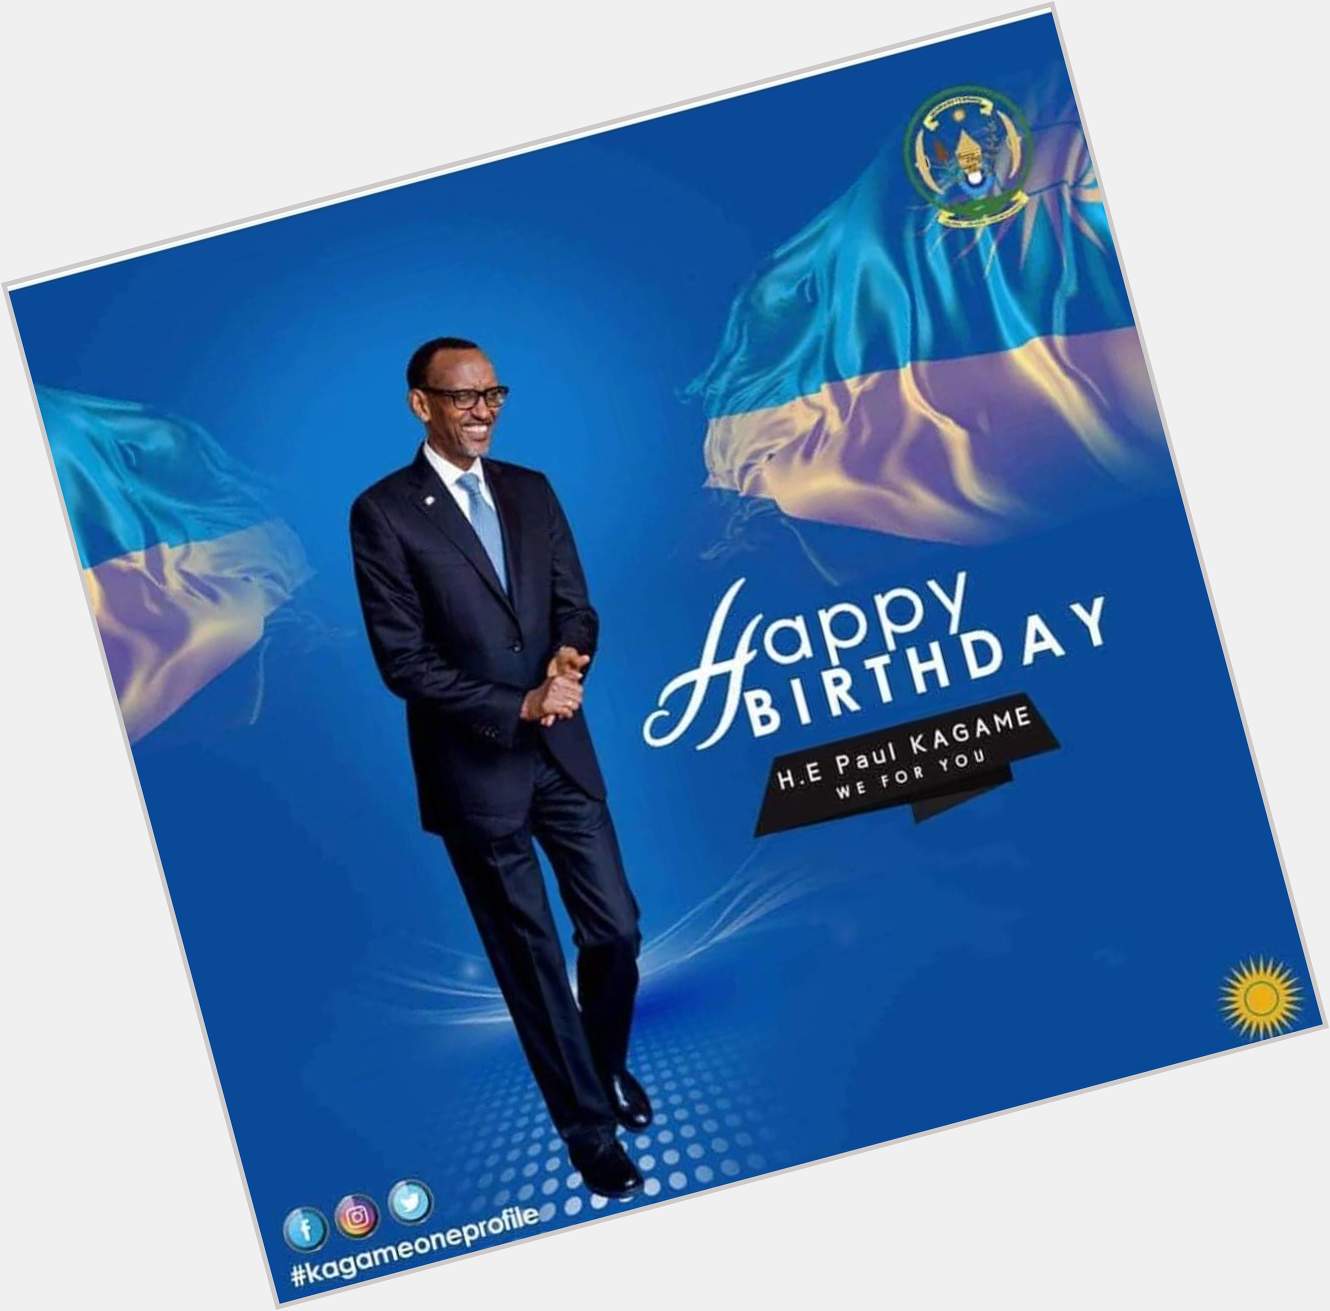 Happy birthday HE Paul KAGAME the President of Rwanda 